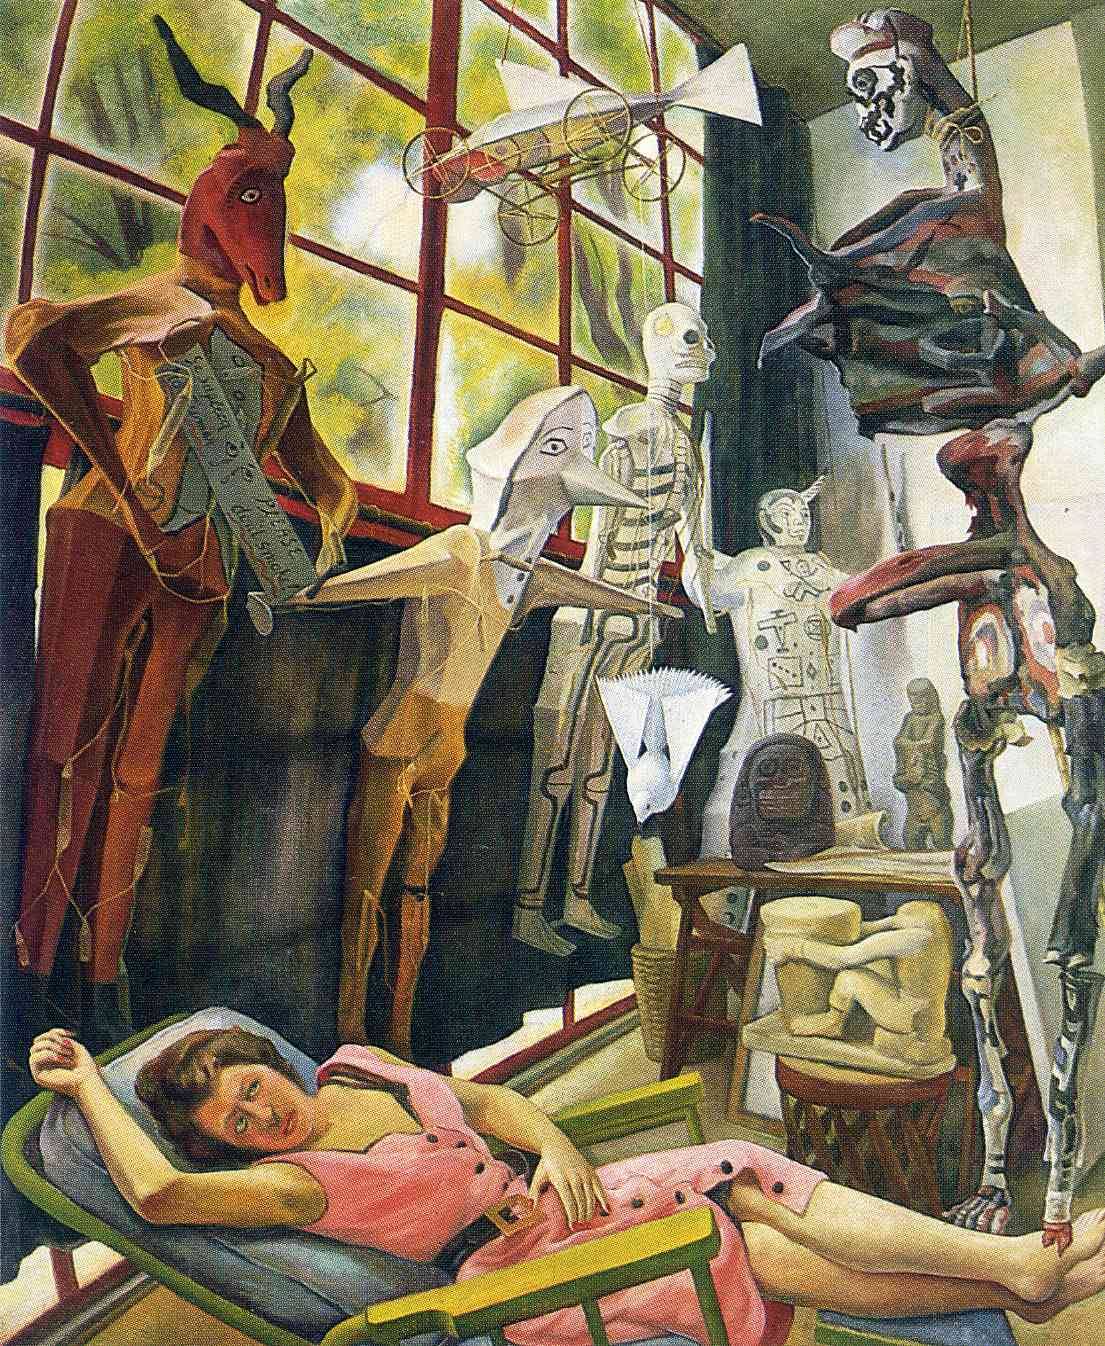 The Painter’s Studio, 1954, Diego Rivera
Size: 150x178 cm
Medium: oil on canvas